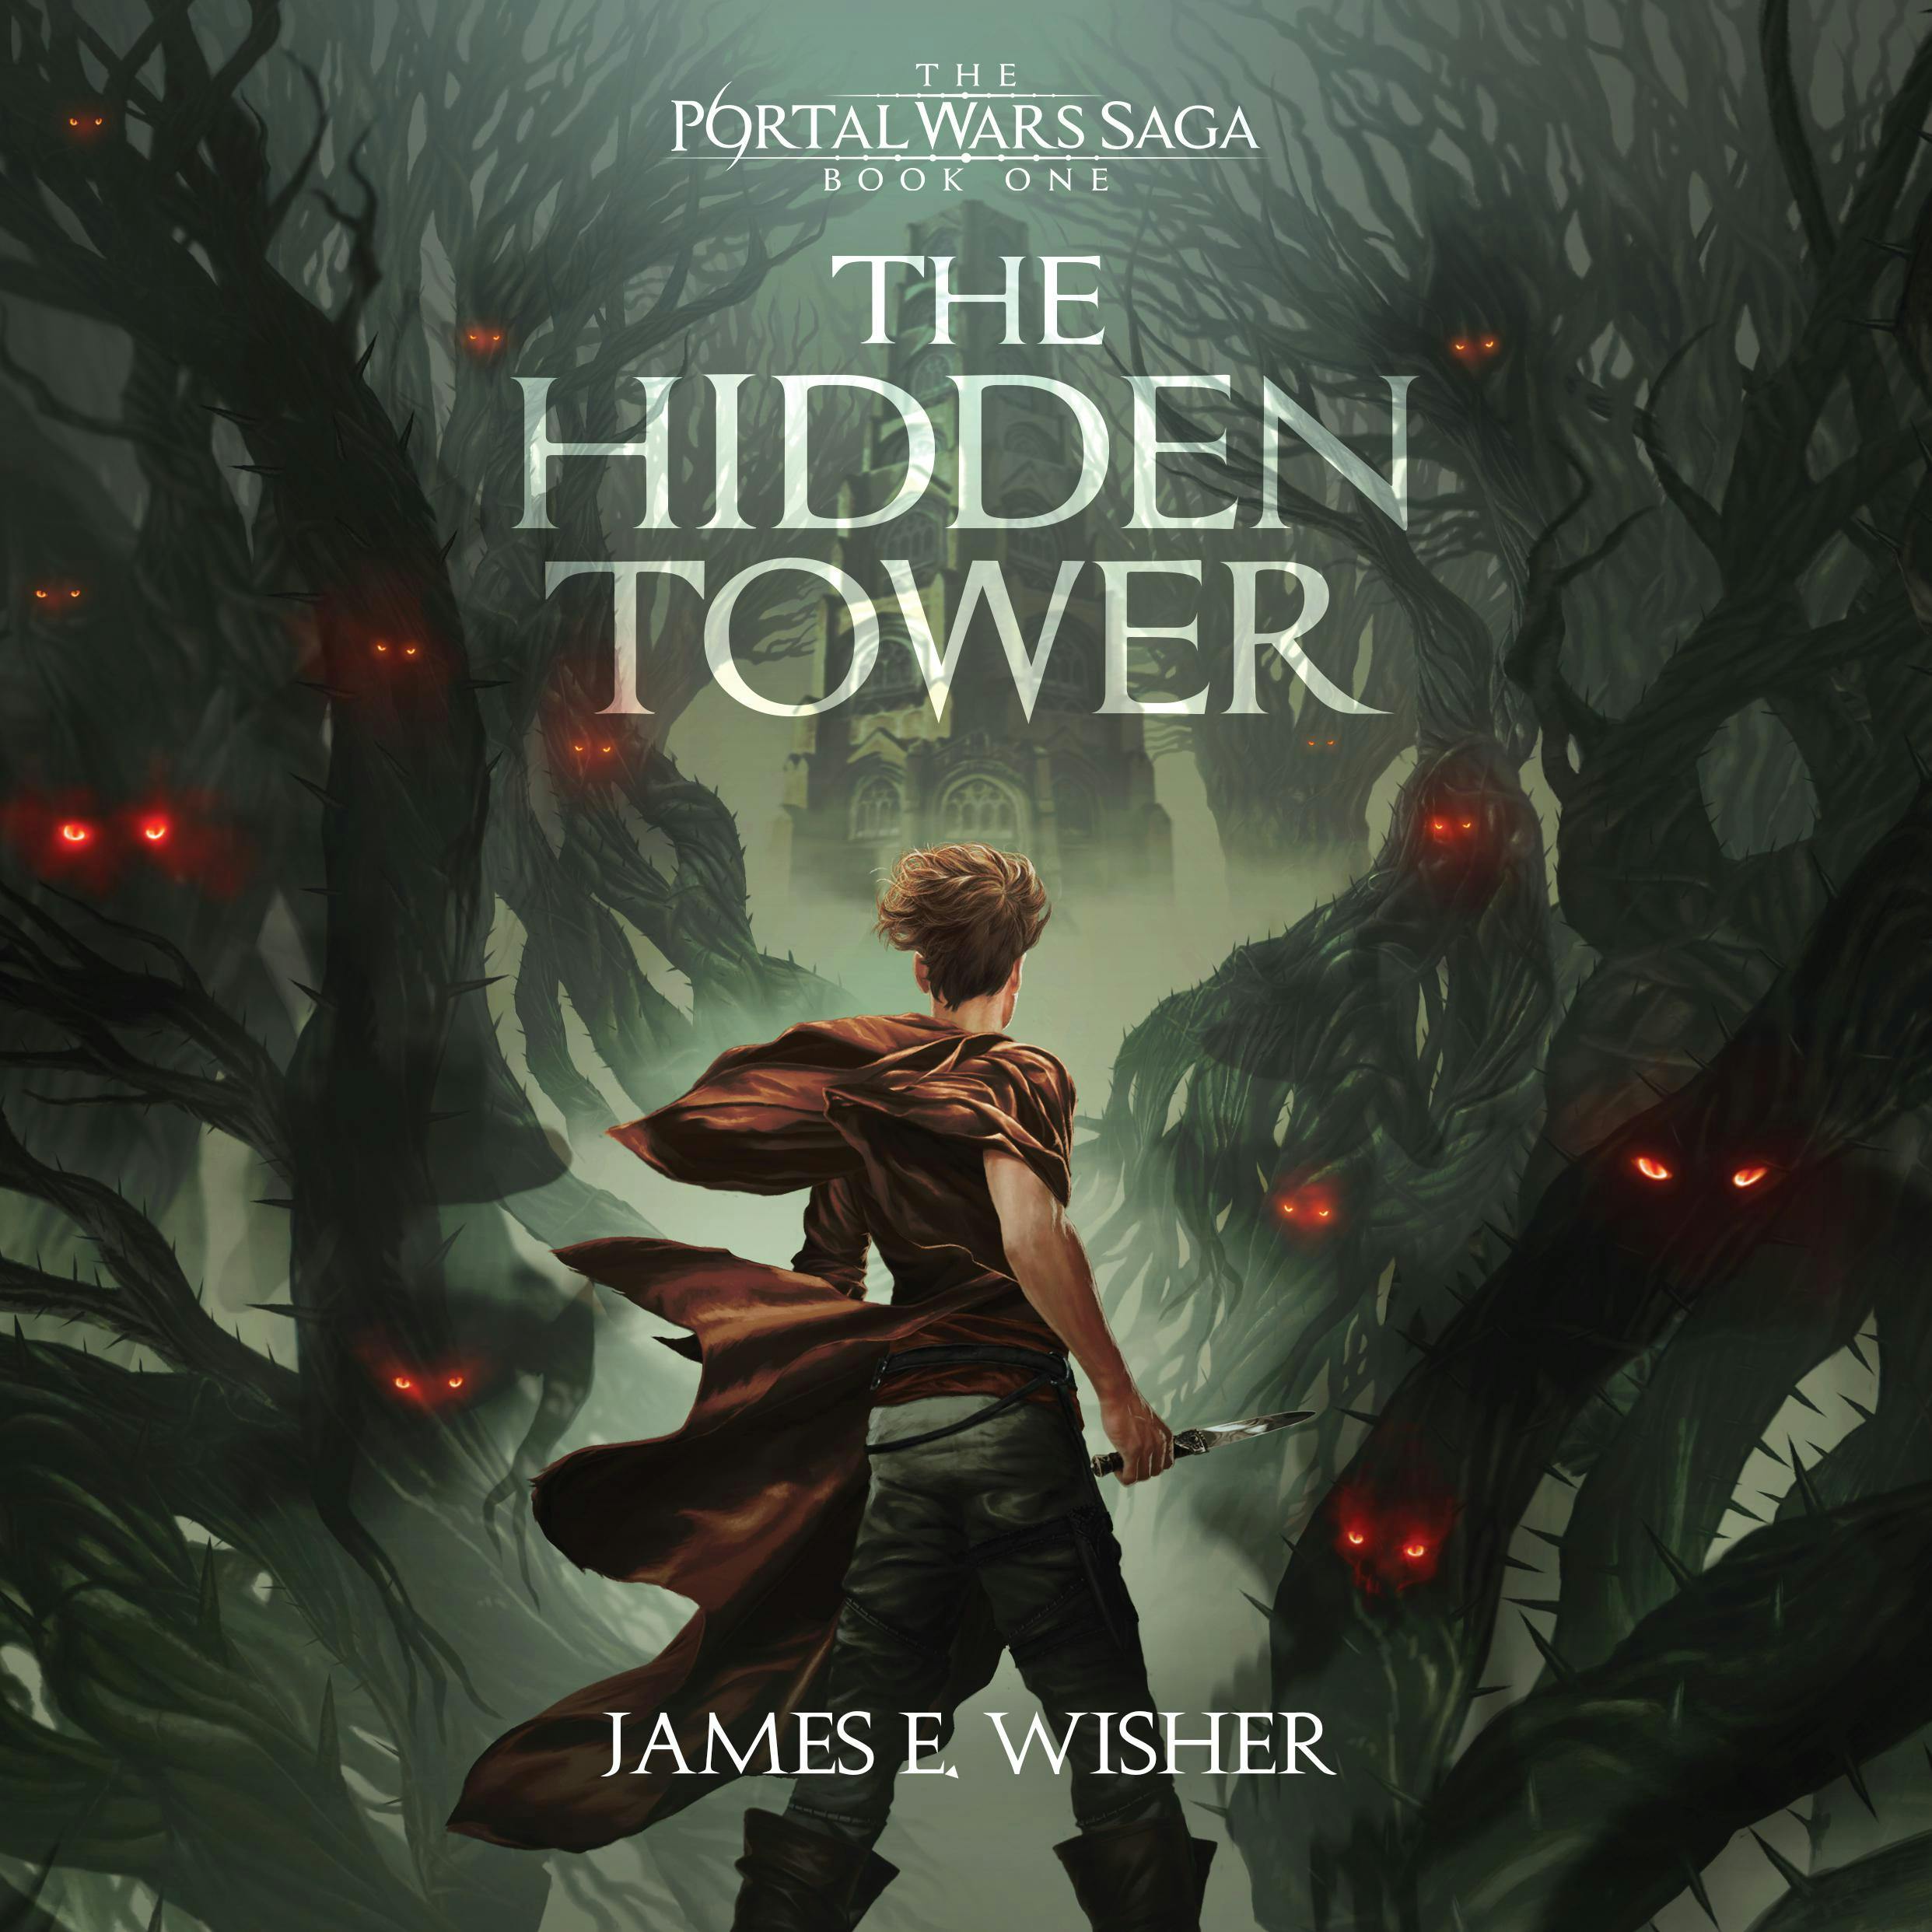 The Hidden Tower - James E. Wisher